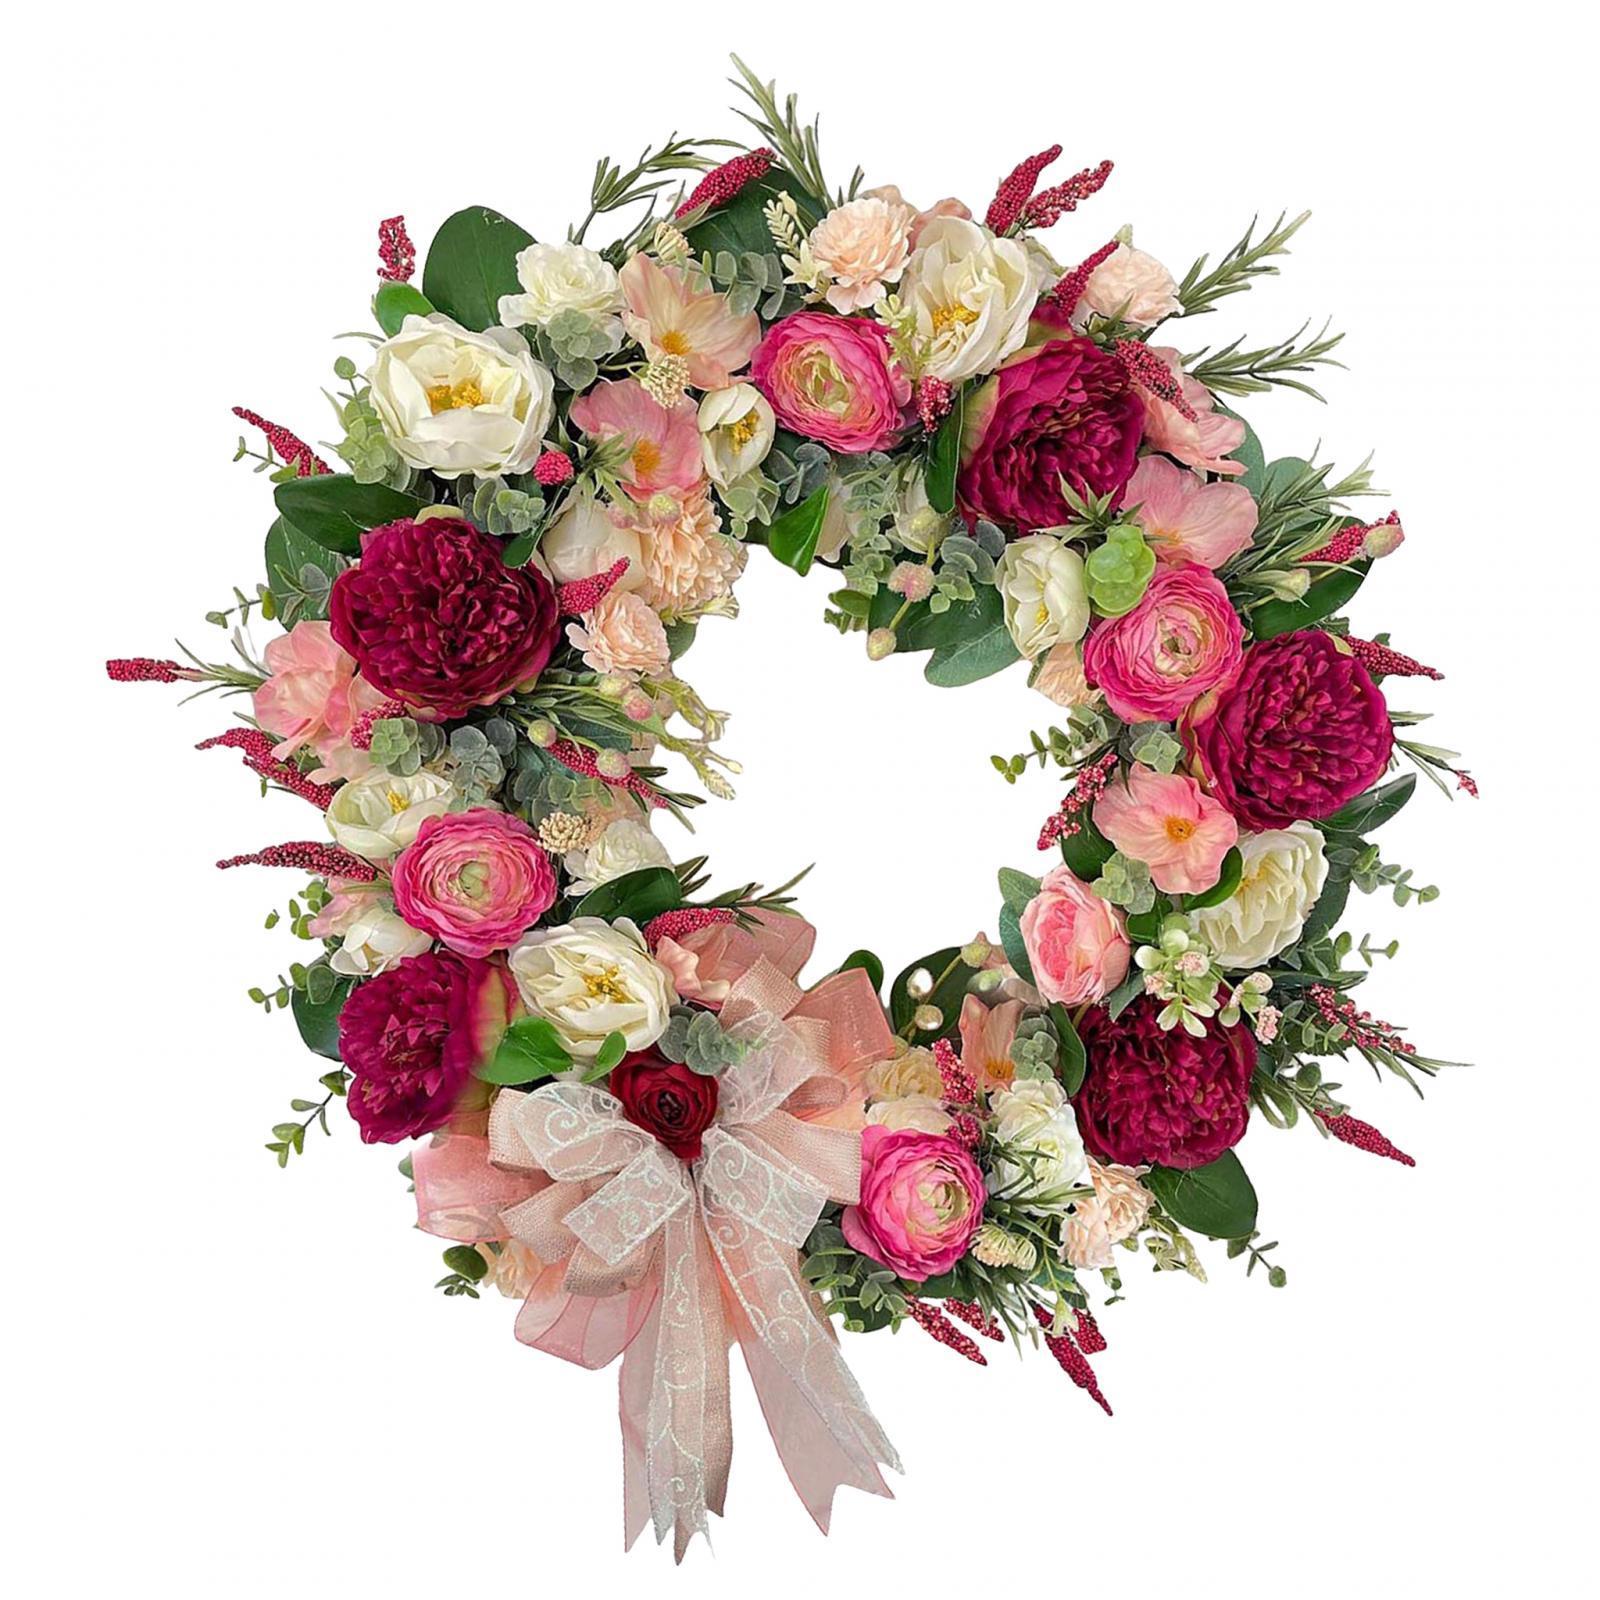 Romantic Door Flower Wreath, Floral Indoor Wreath, Faux Flower Ornaments ,Hanging Spring Wreath for Home Wedding, Front Doors Shop Windows Party